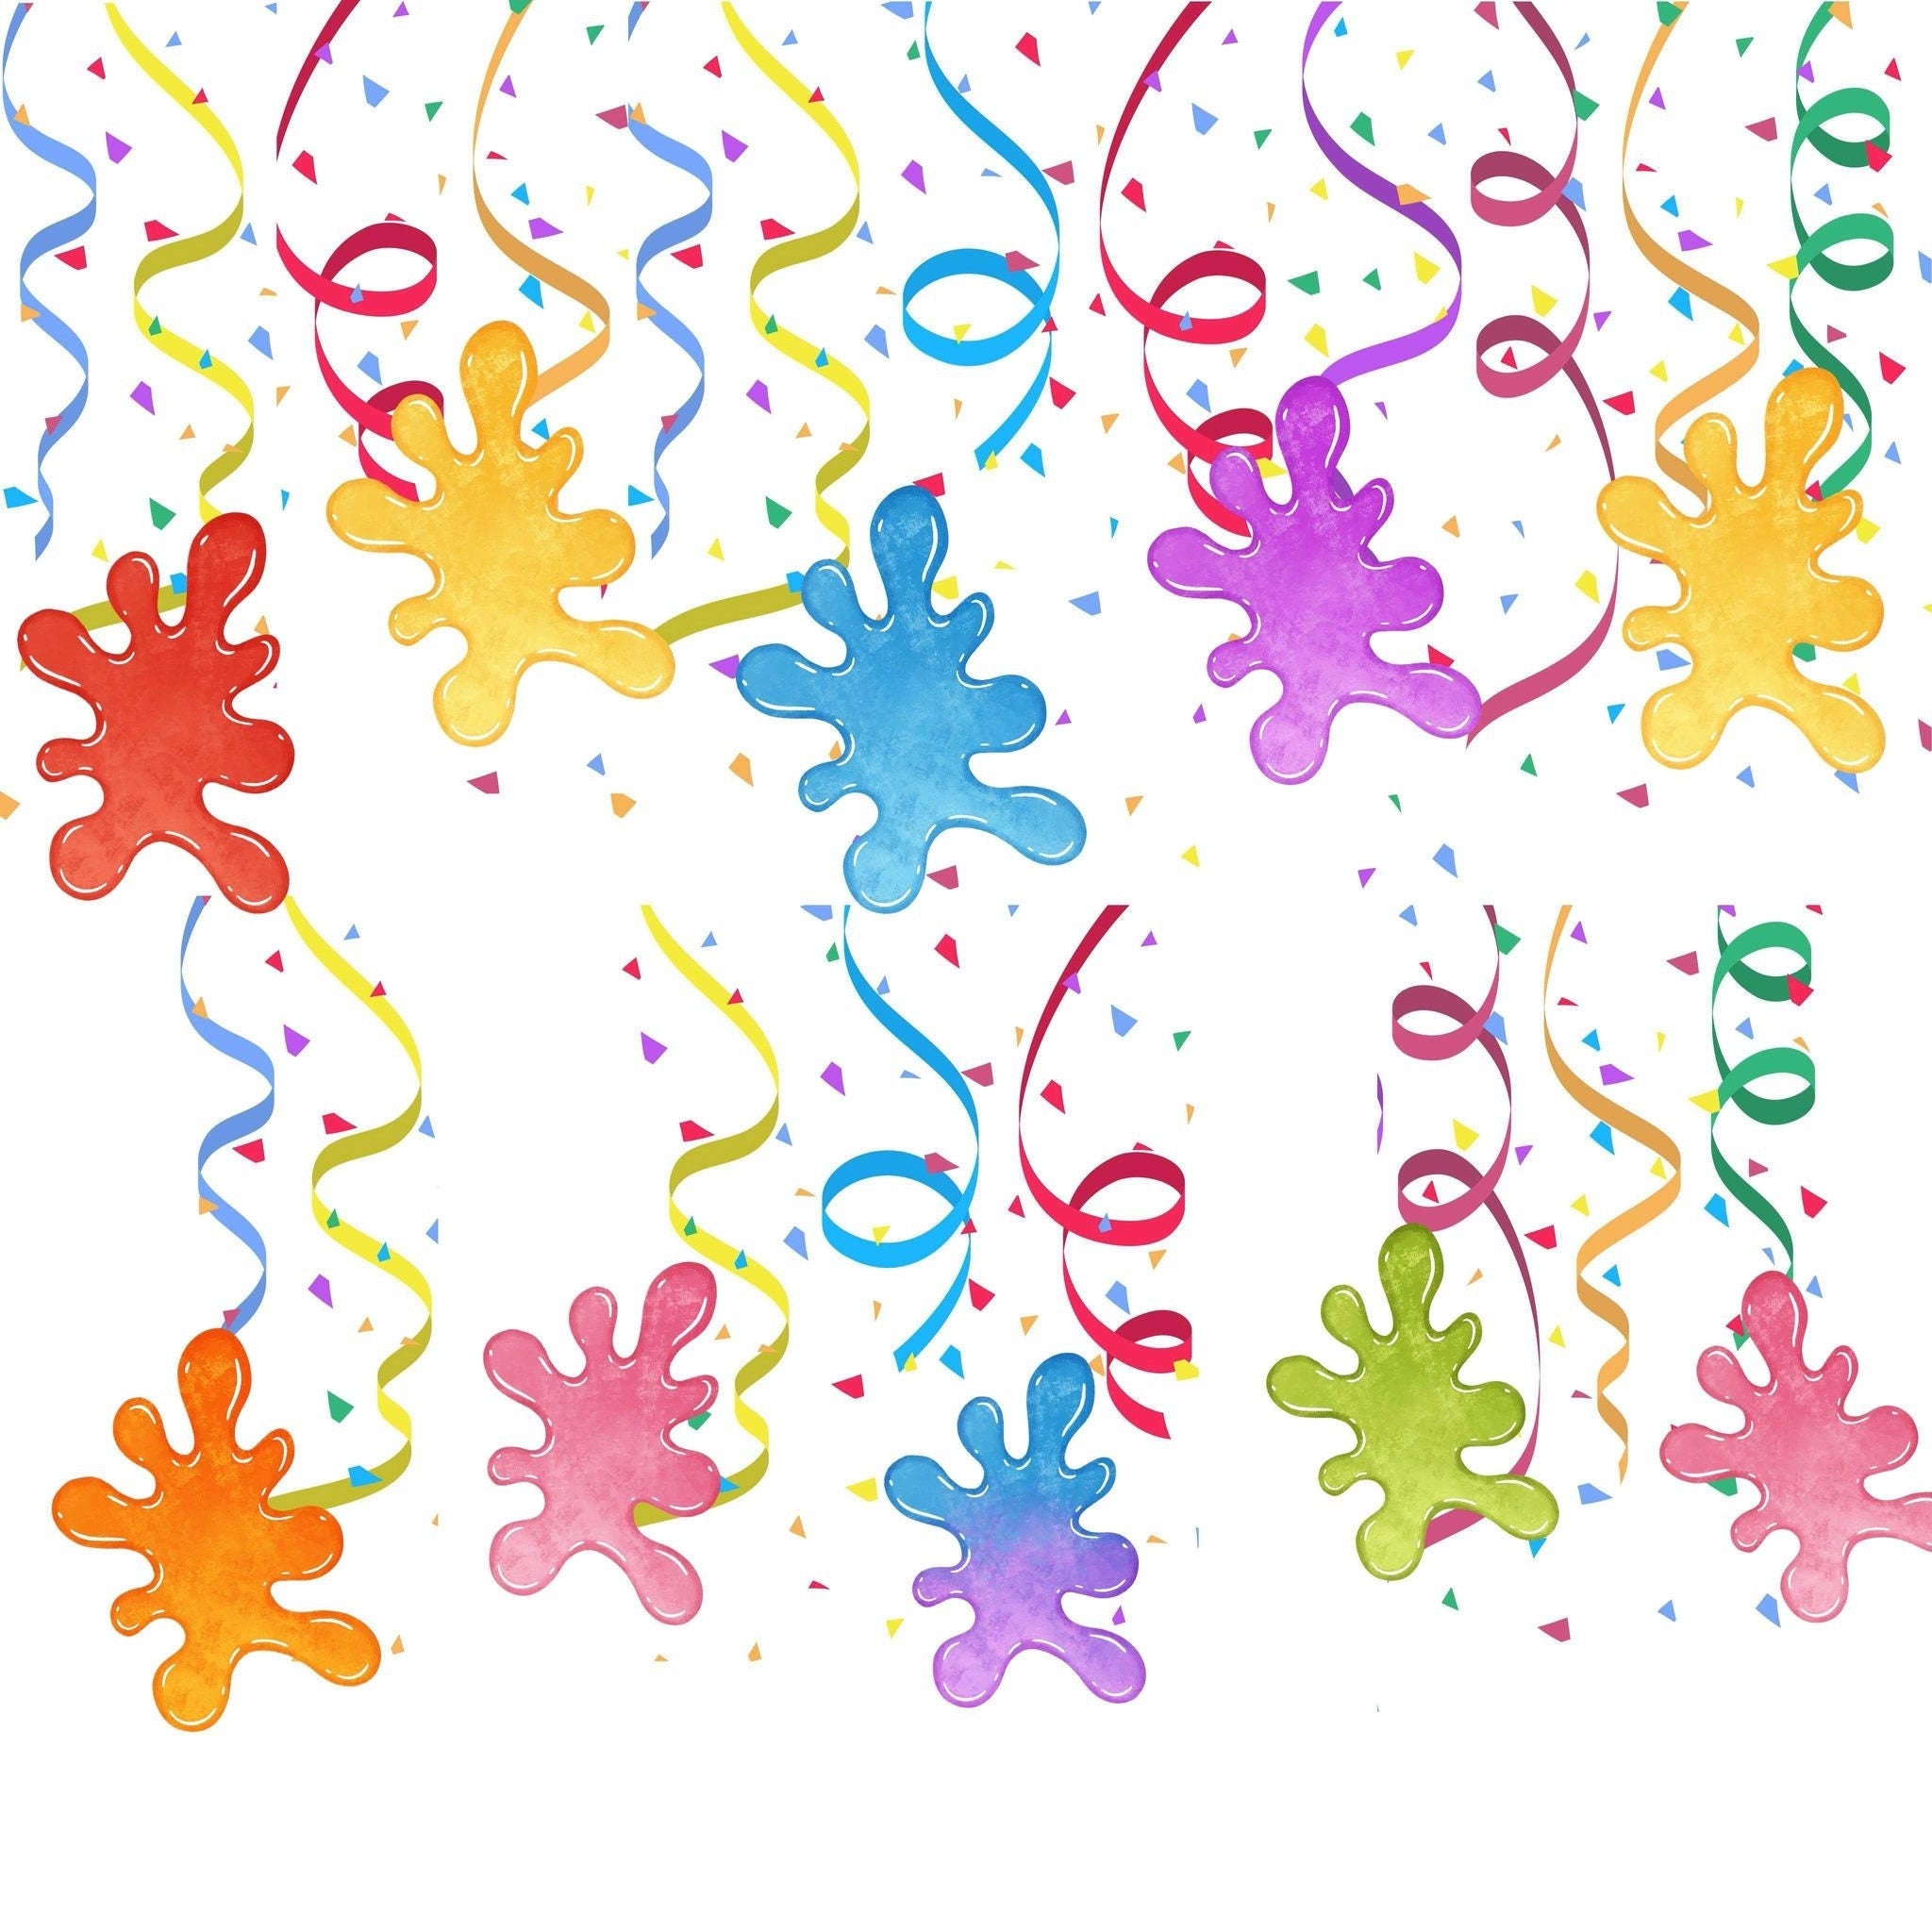 Vibrant Slime Swirls Decoration Set - 10pcs Colorful Party Hanging Cutouts